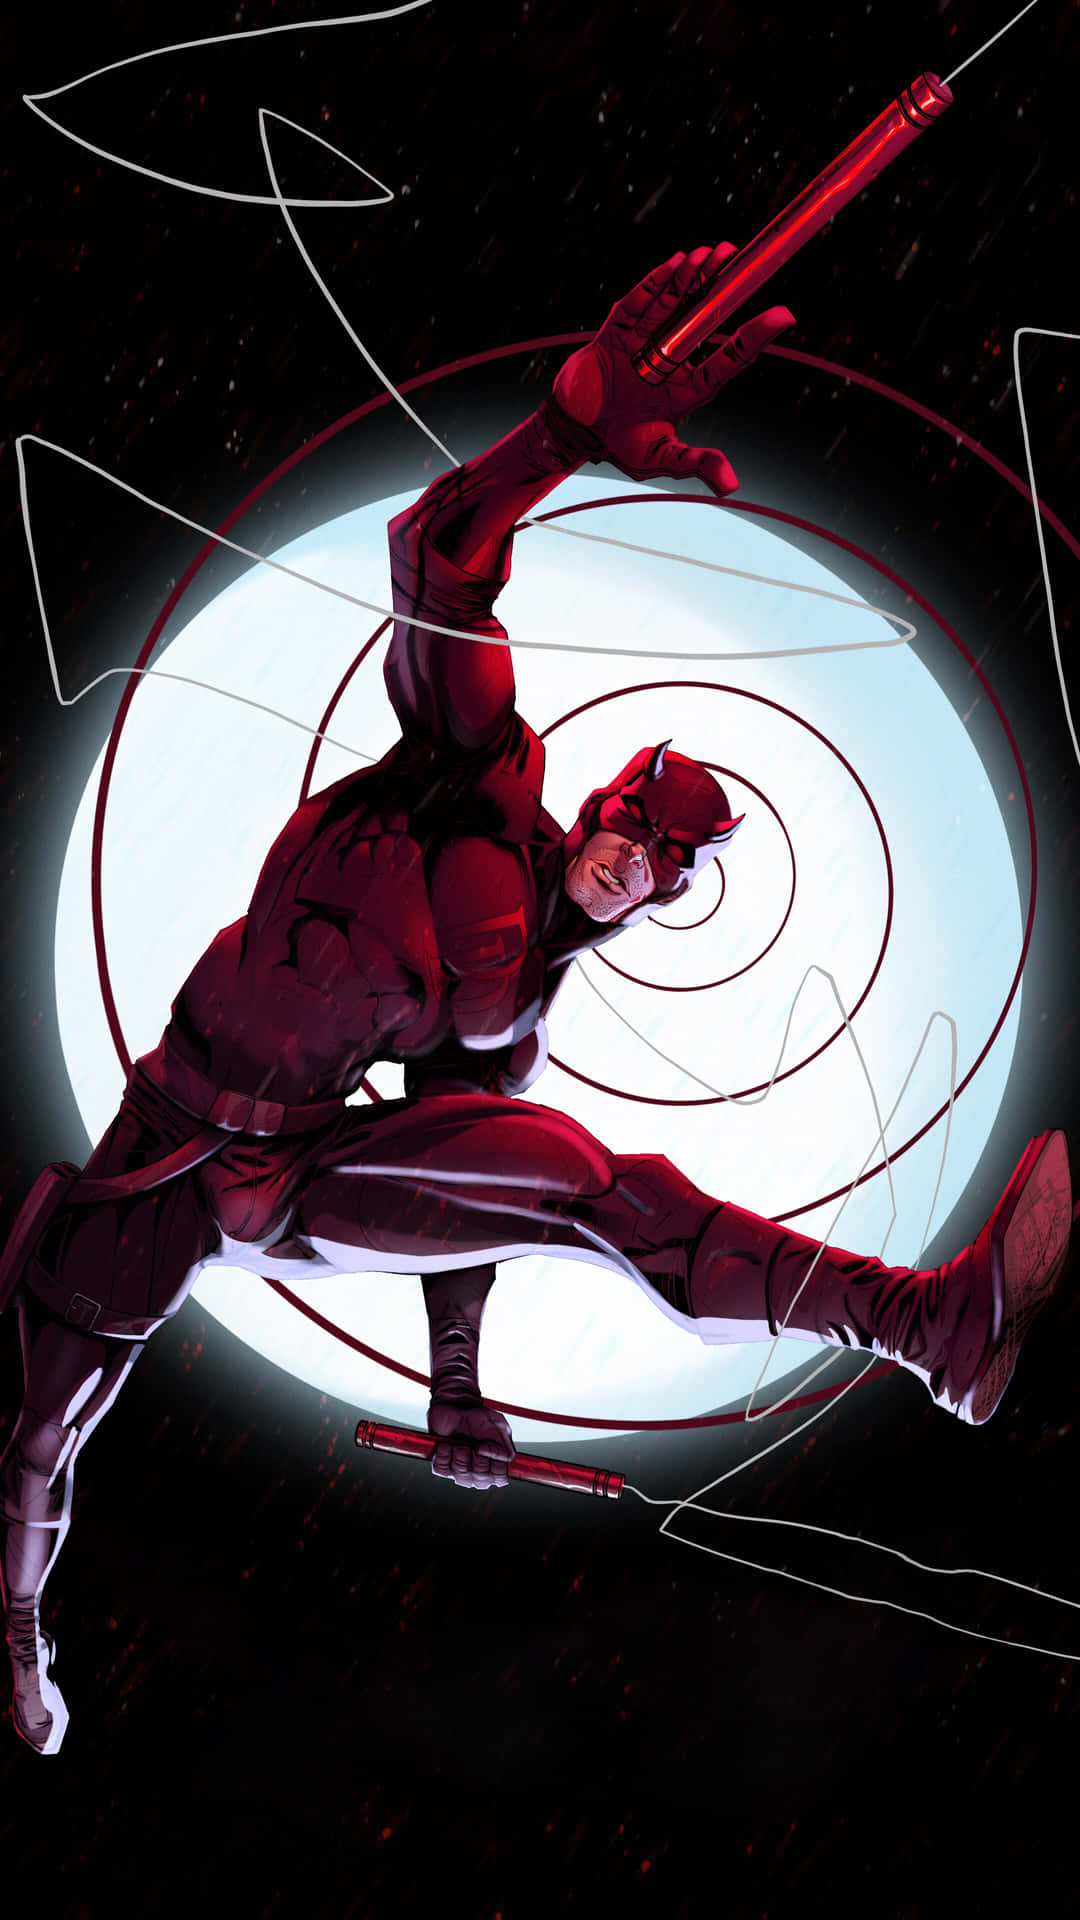 An illustration of Daredevil, the Marvel superhero